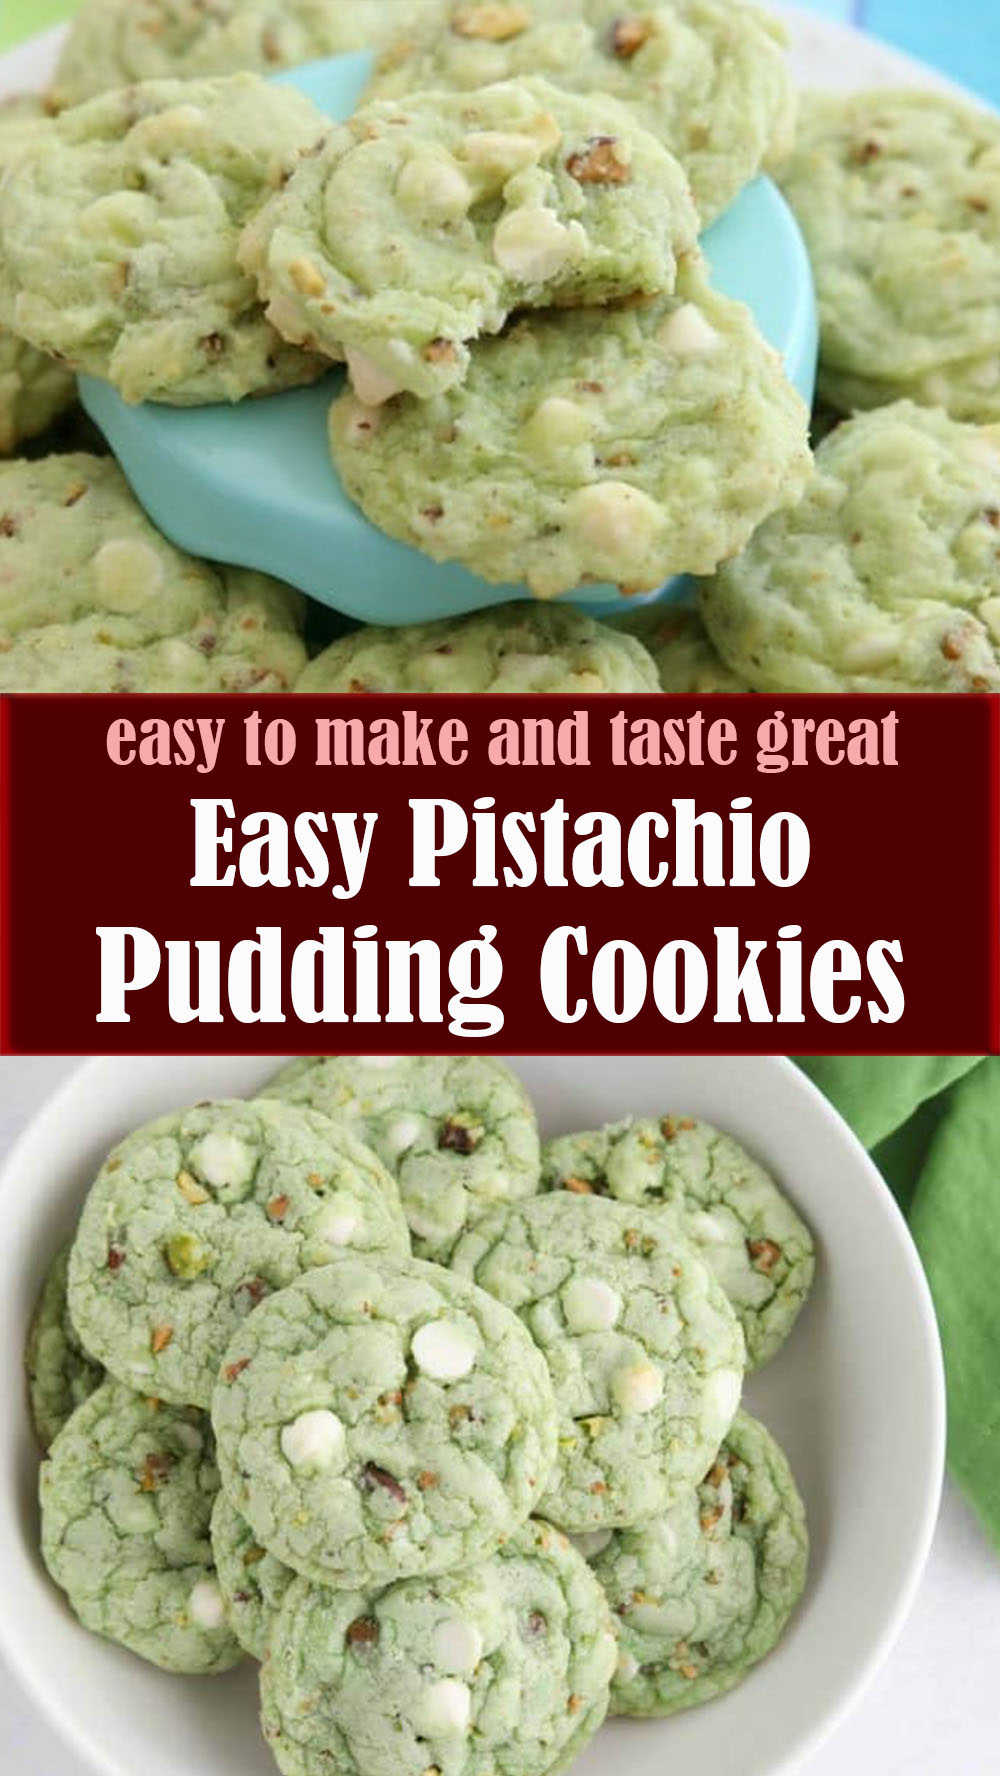 Easy Pistachio Pudding Cookies